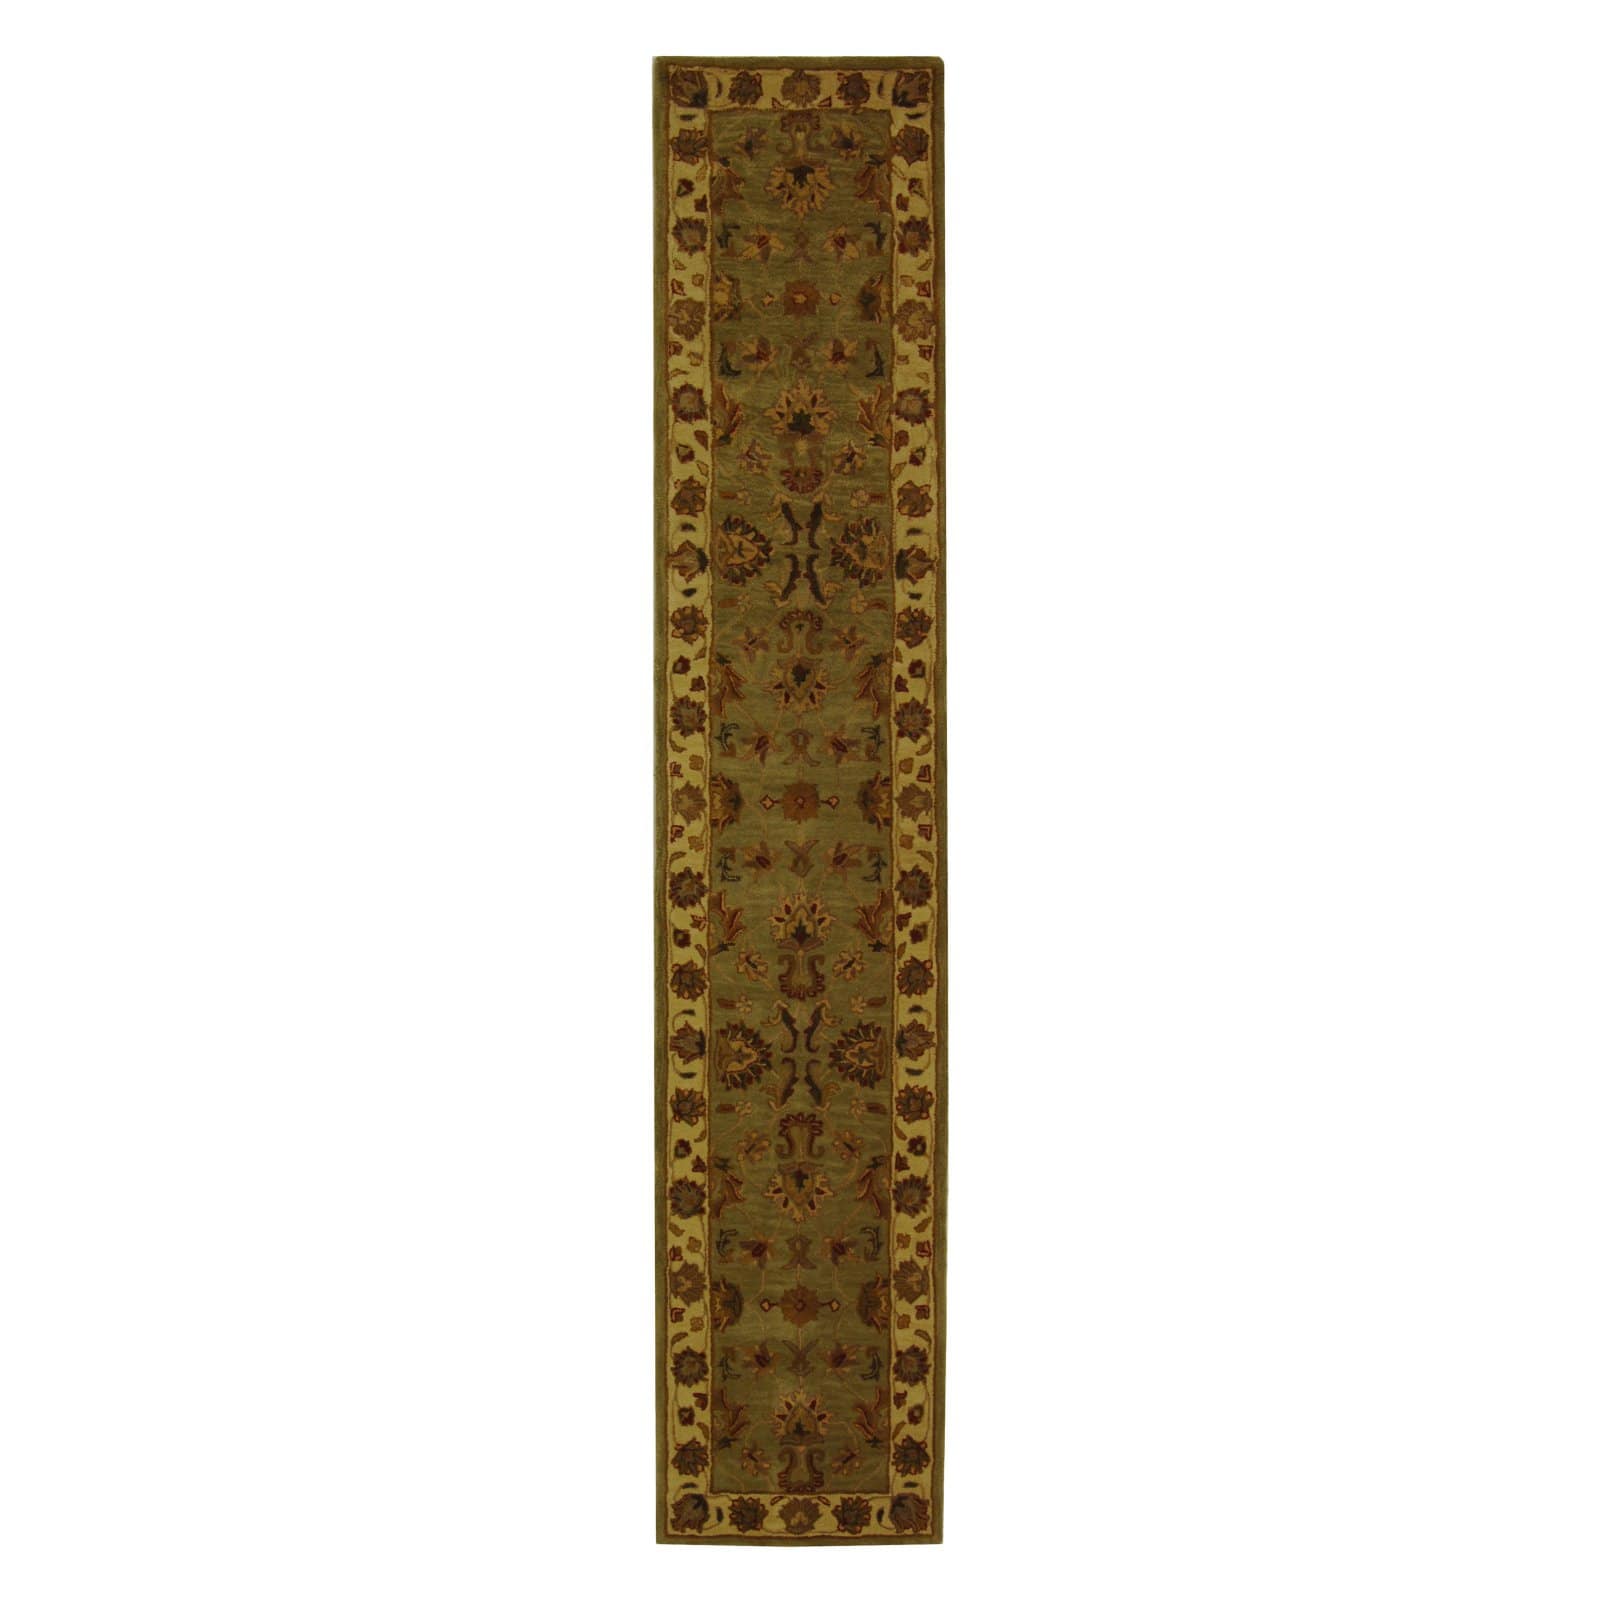 SAFAVIEH Heritage Regis Traditional Wool Area Rug, Green/Gold, 5' x 8' - image 3 of 10